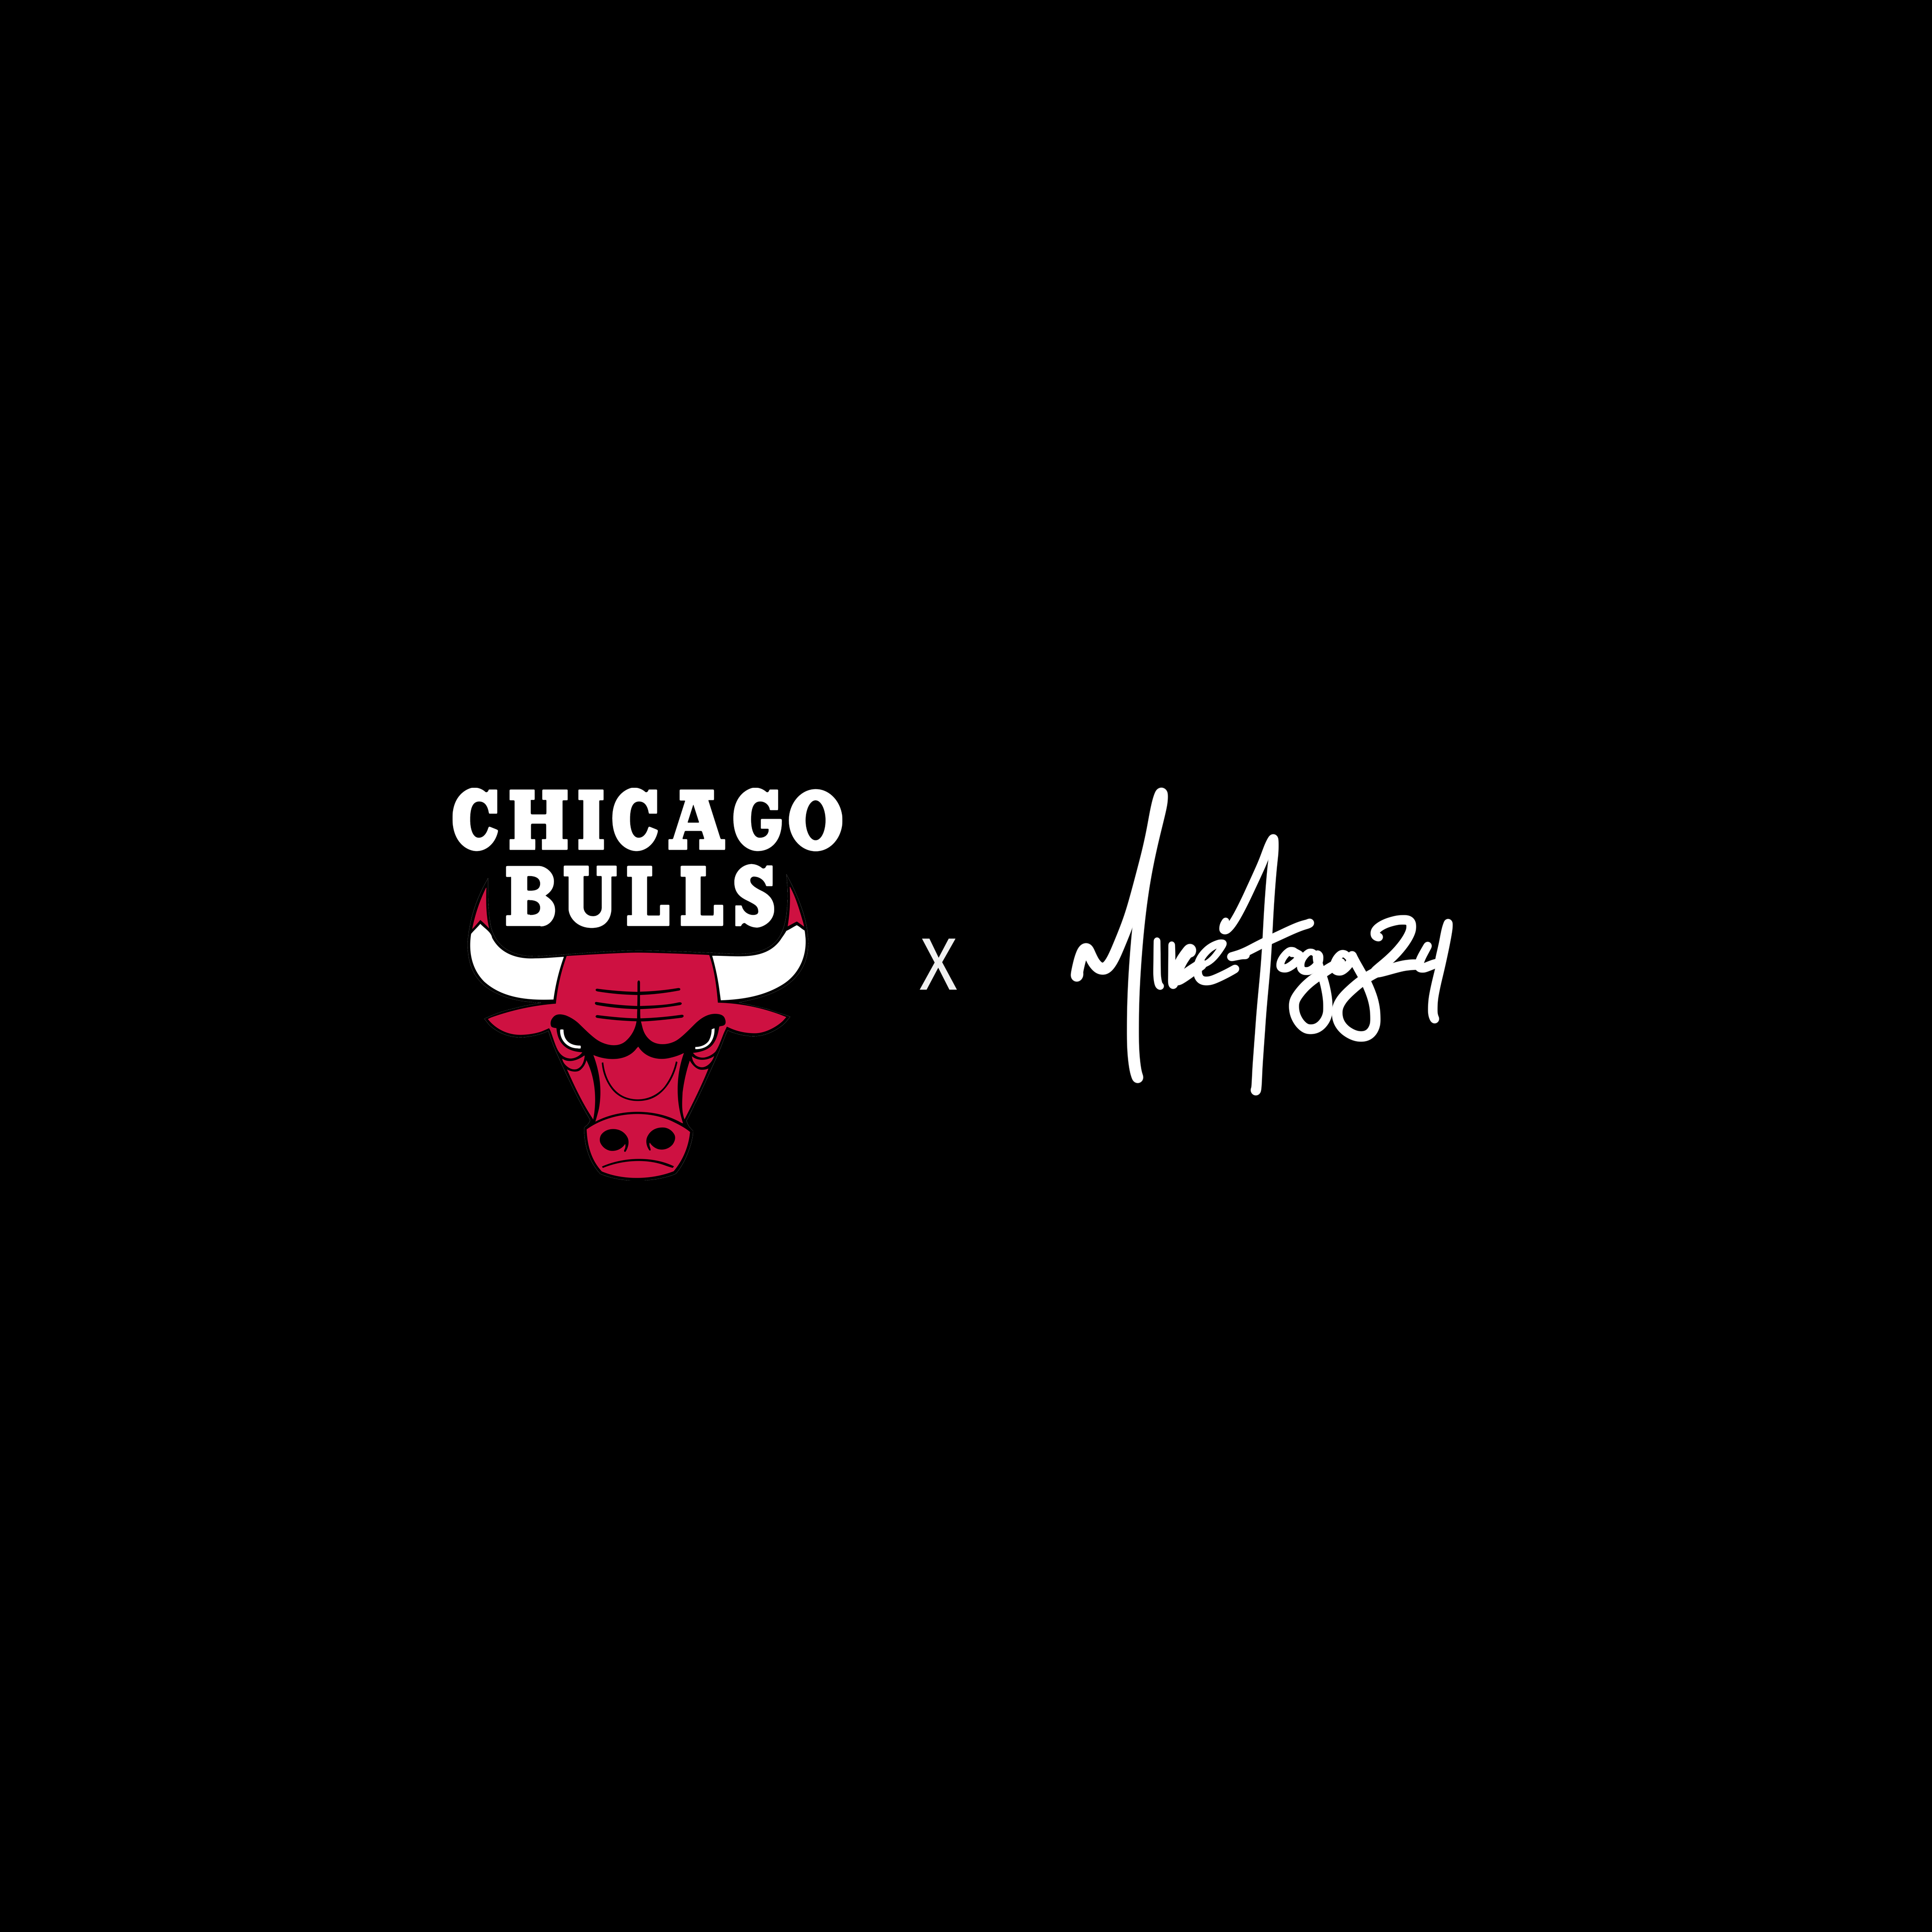 chicago-bulls-x-mikefogg24